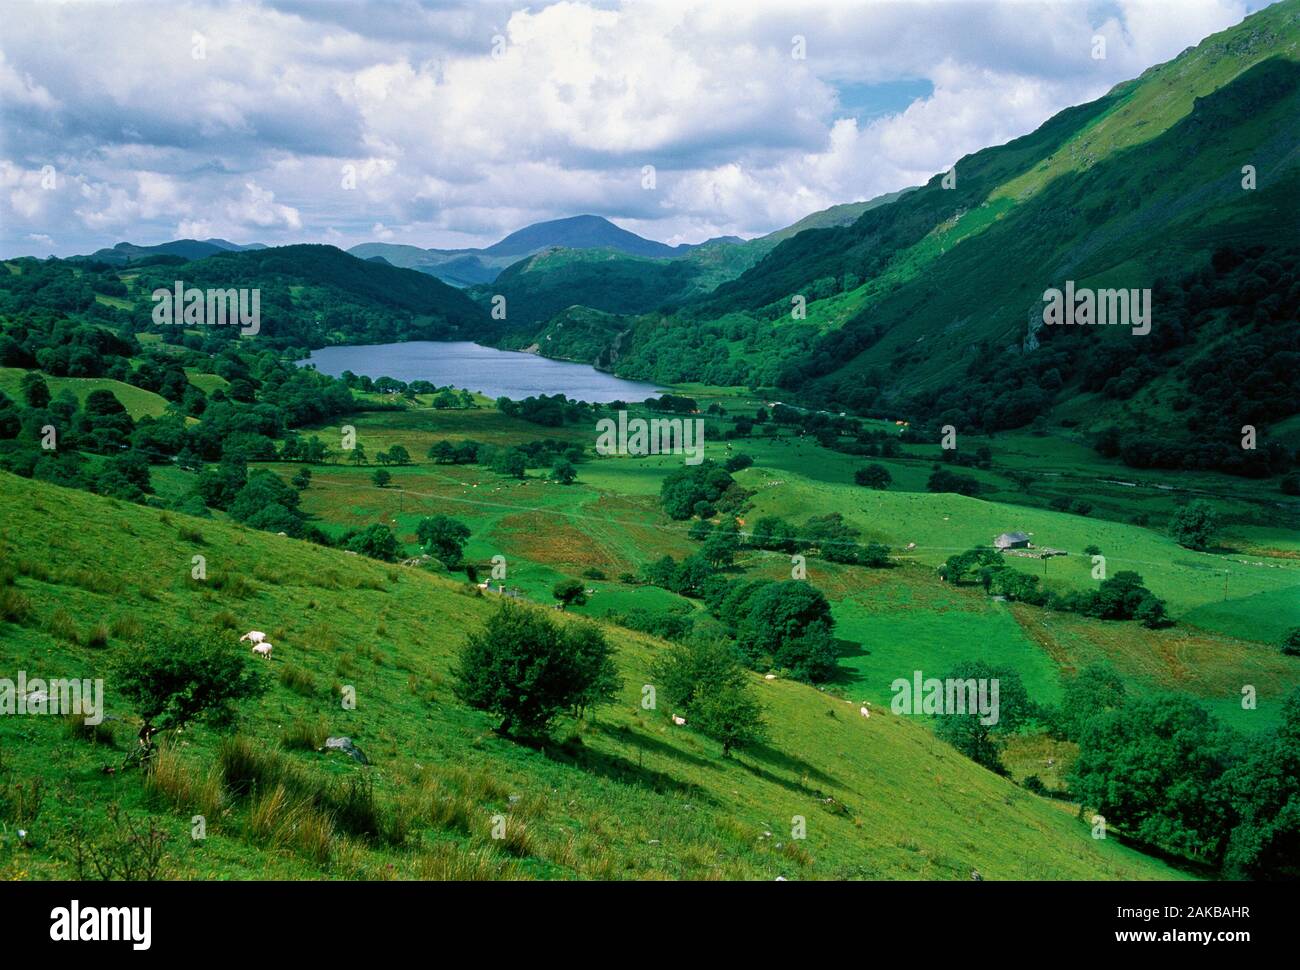 View of lake at bottom of mountain, Wales, UK Stock Photo